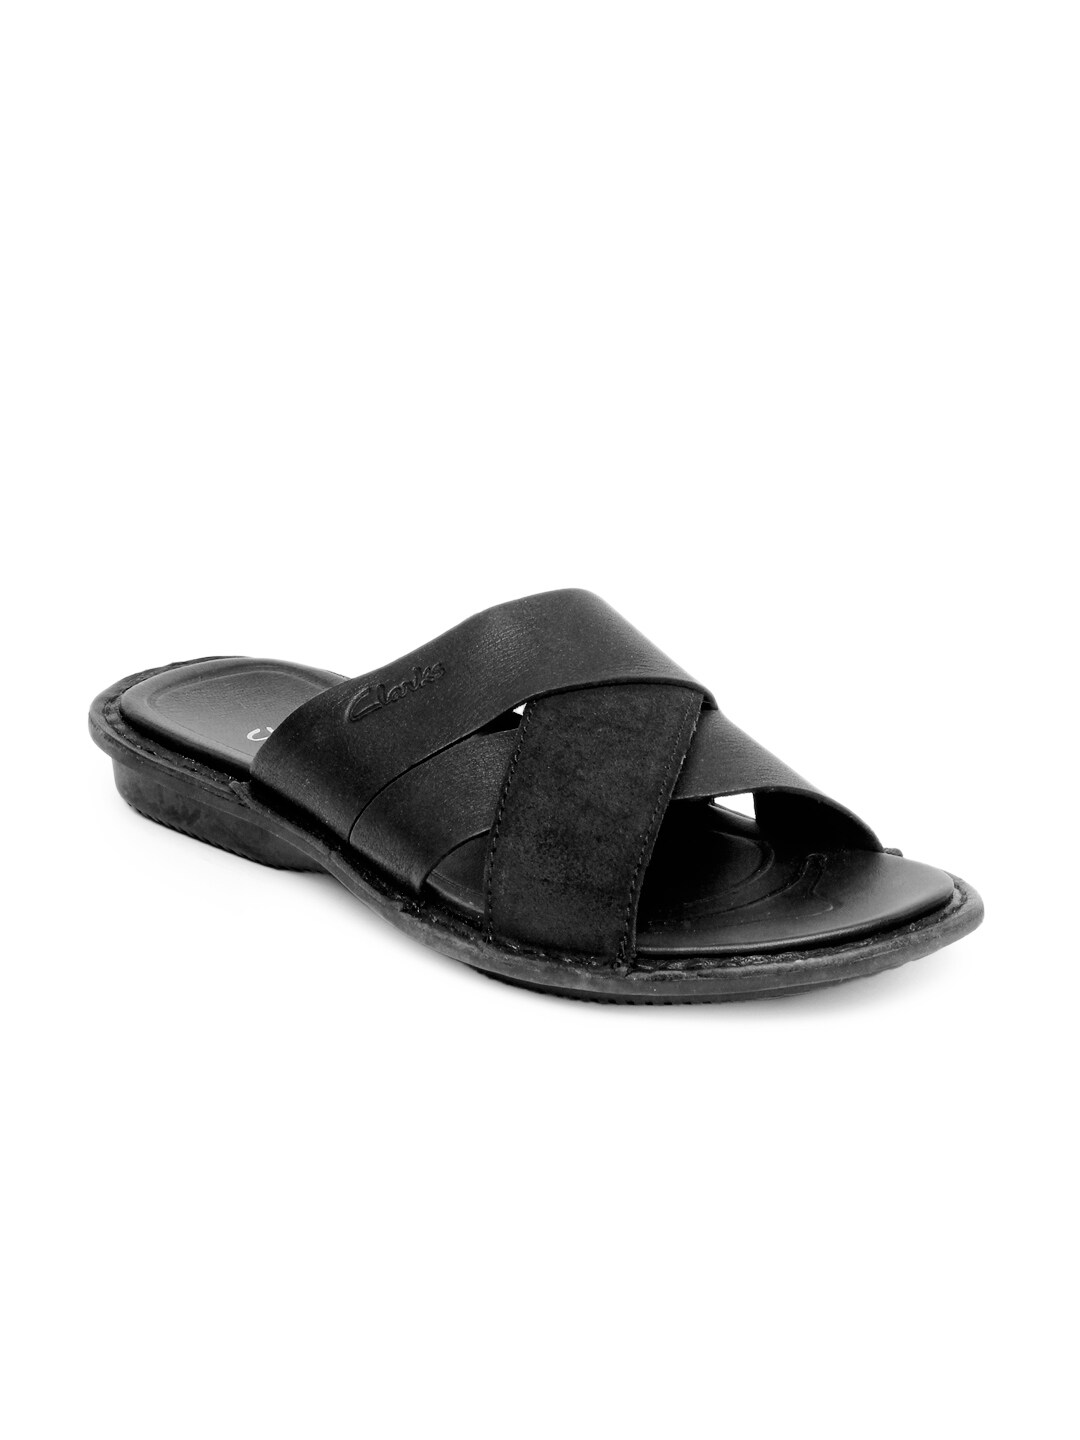 Clarks Men Black Sandals